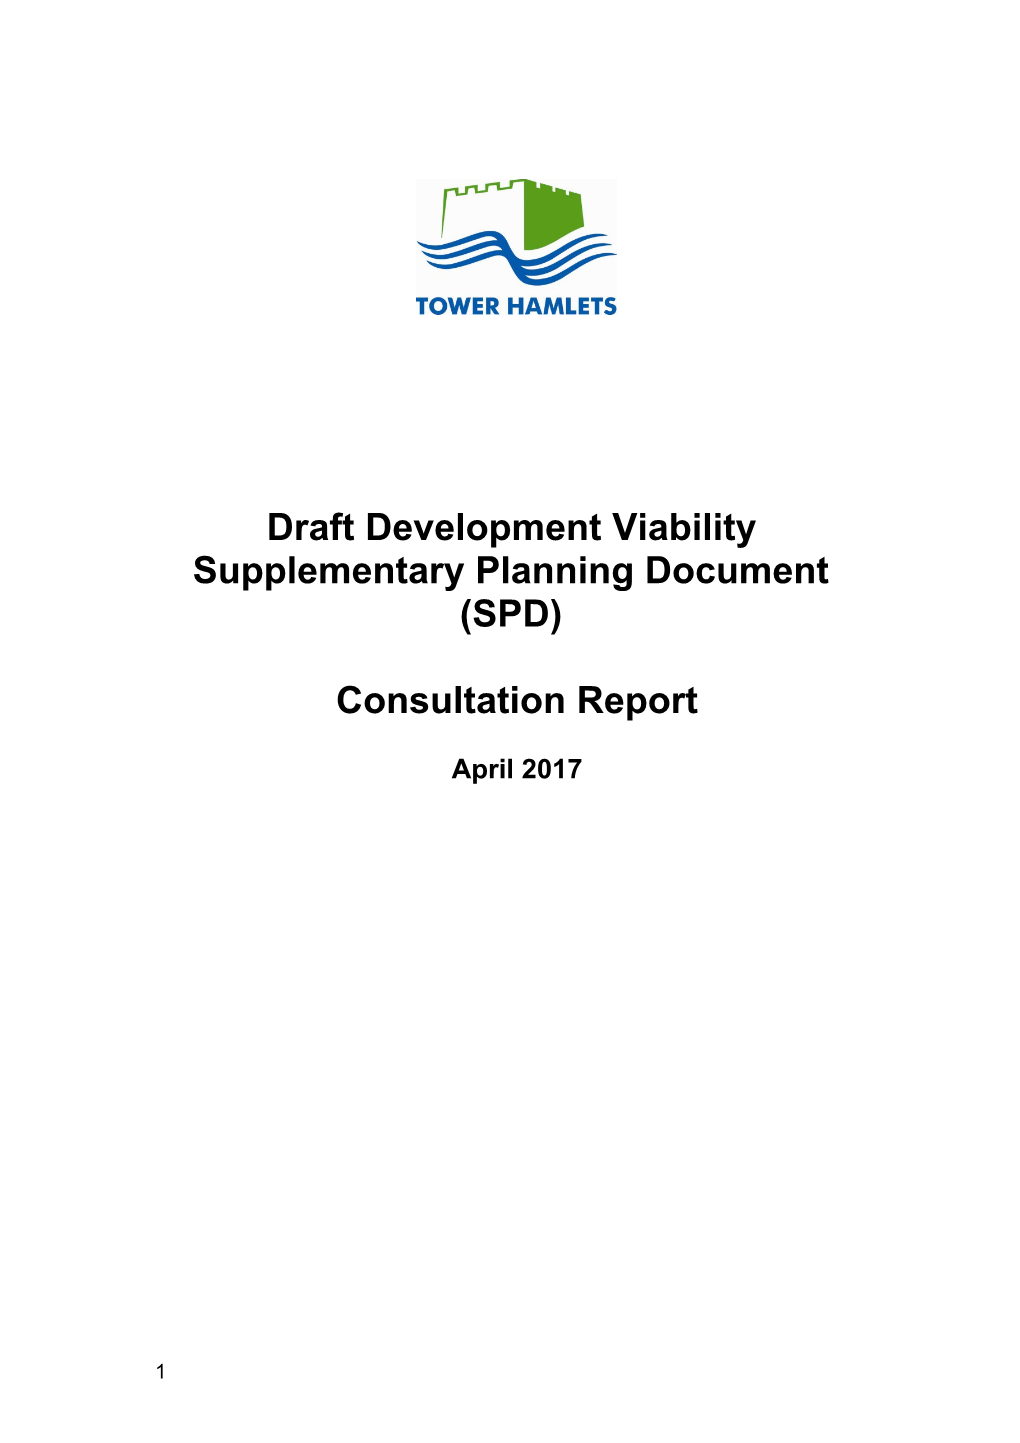 Supplementary Planning Document (SPD)